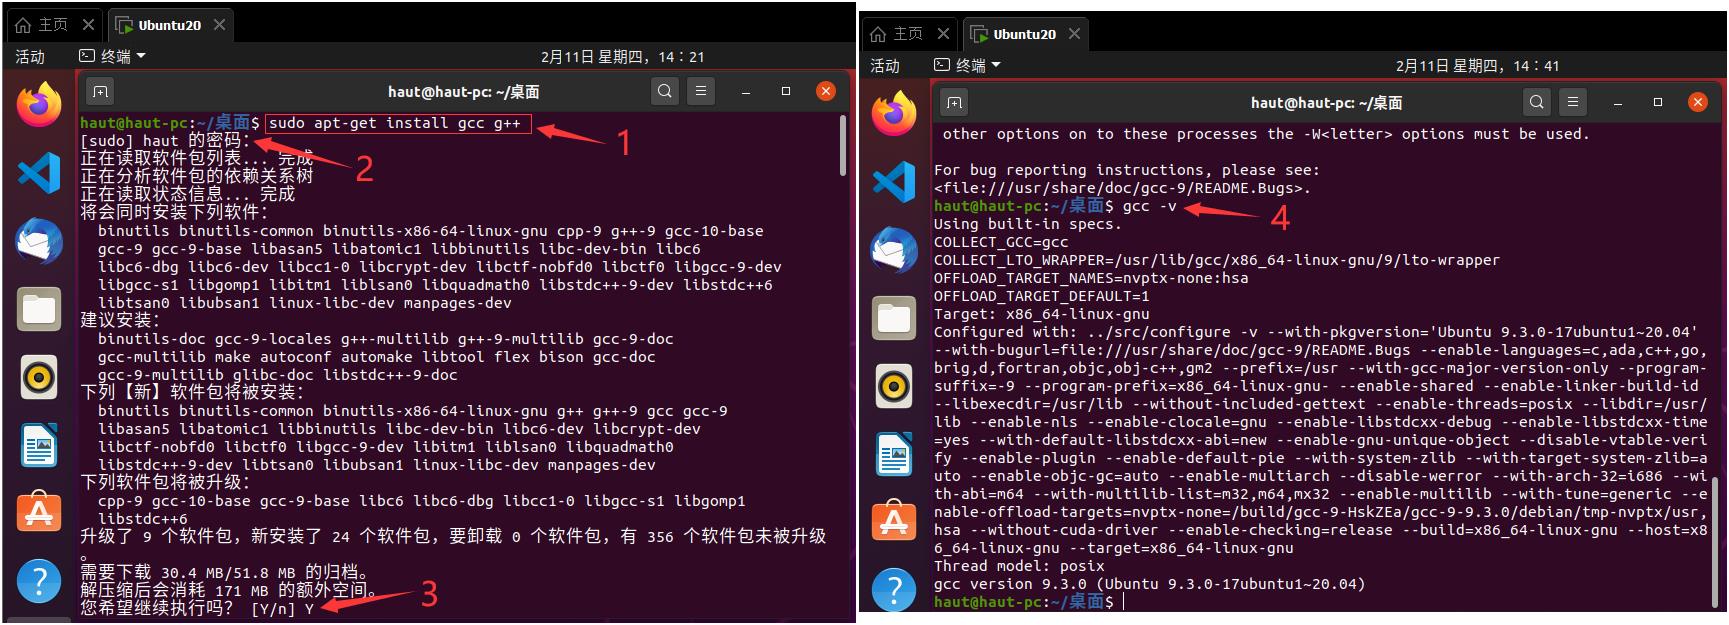 Linux002、Ubuntu20常用初始化配置 - 文章图片